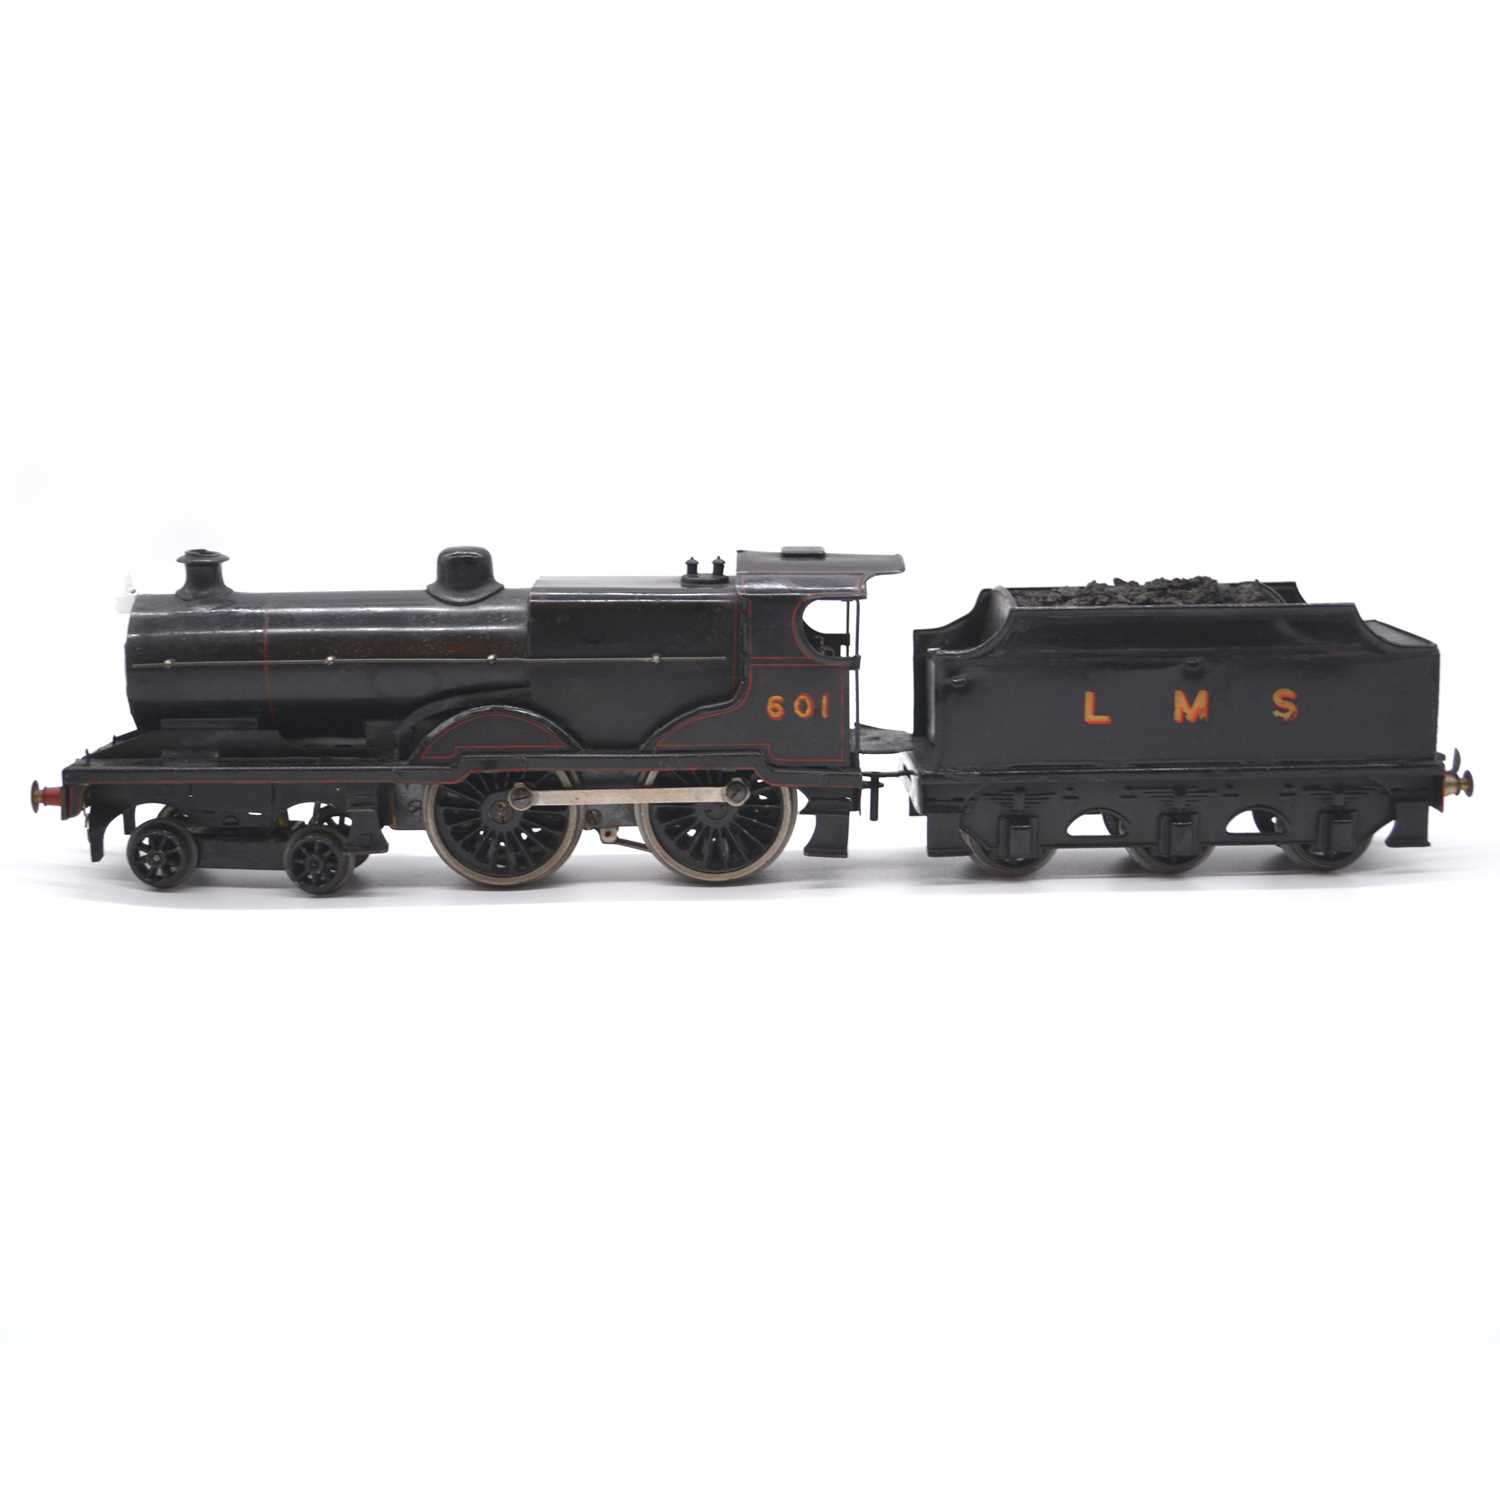 Lot 94 - Bassett-Lowke O gauge model railway locomotive and tender, LMS 4-4-0, no.601